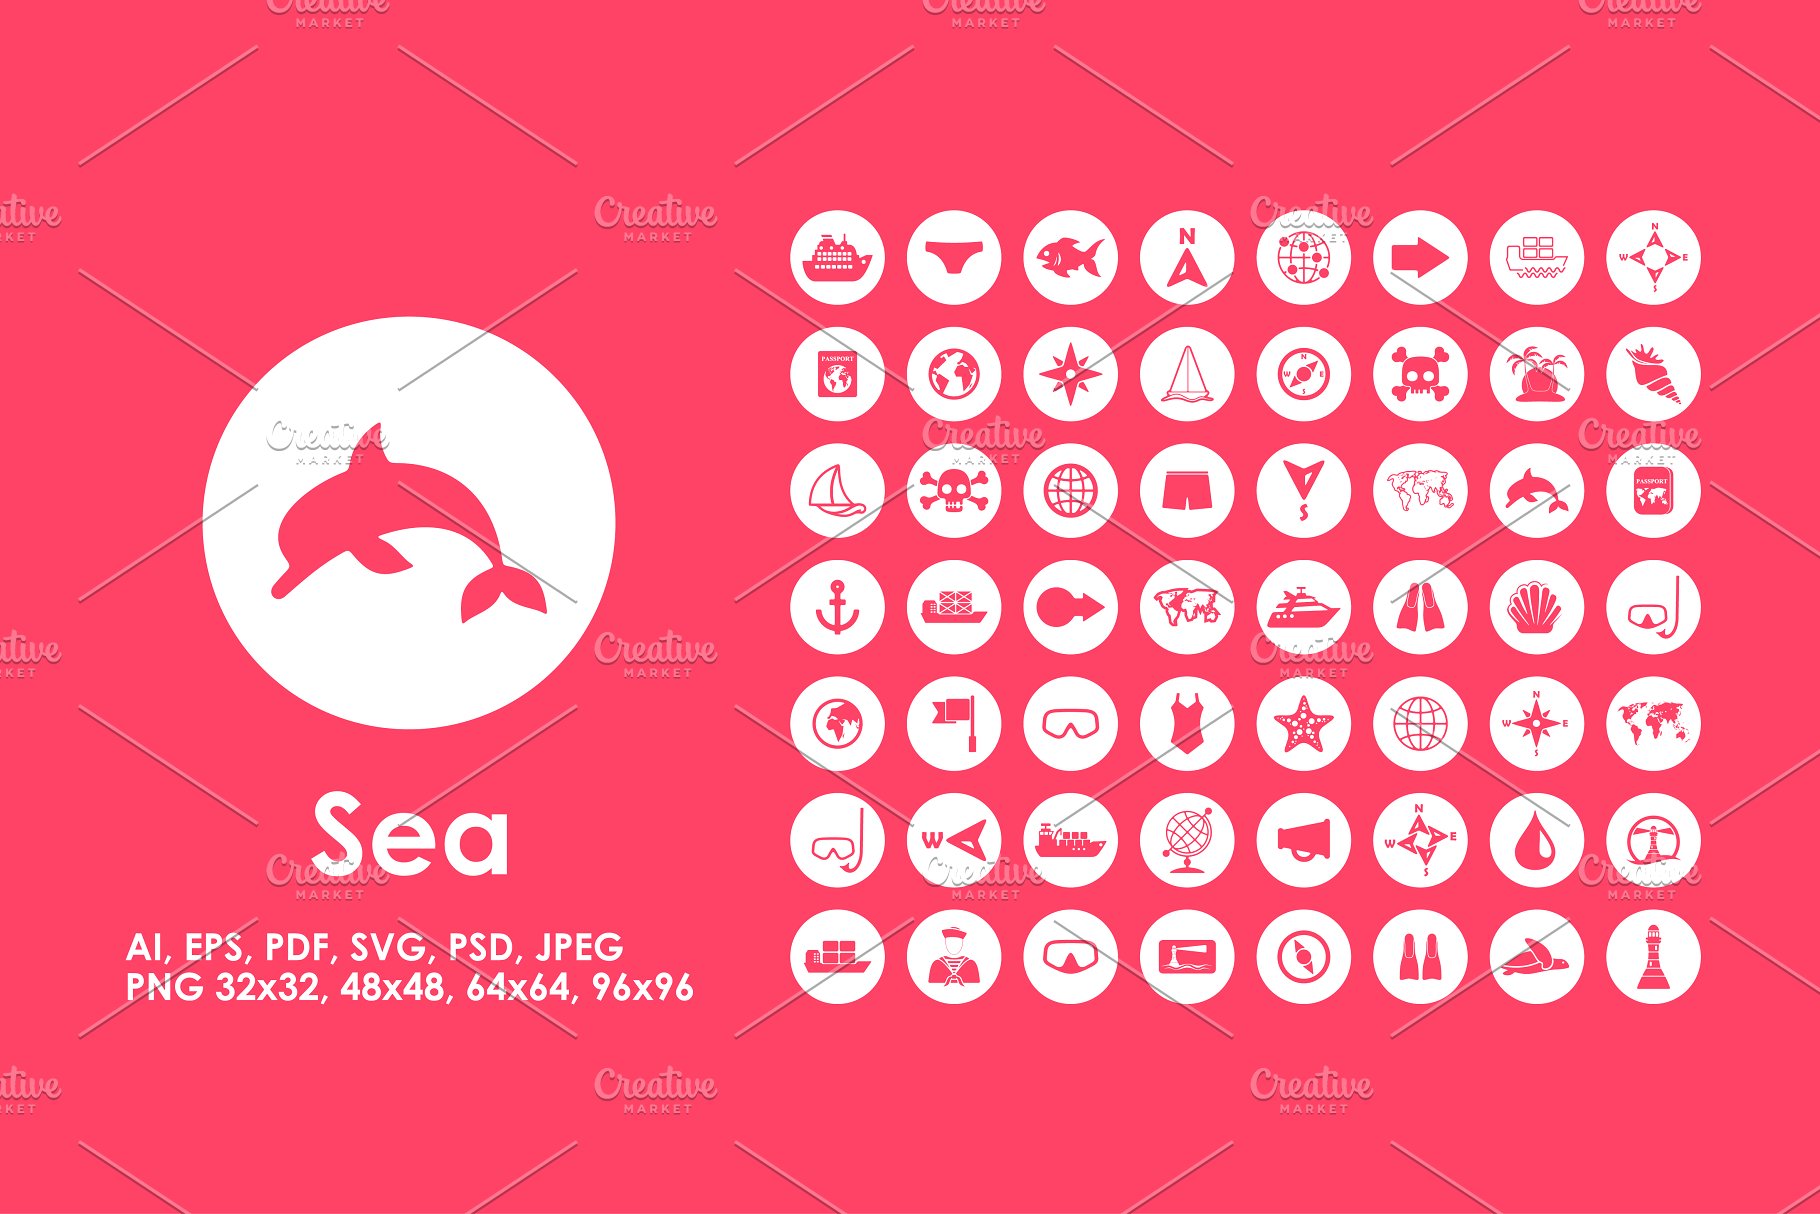 海洋元素矢量图标素材 56 Sea simple icons